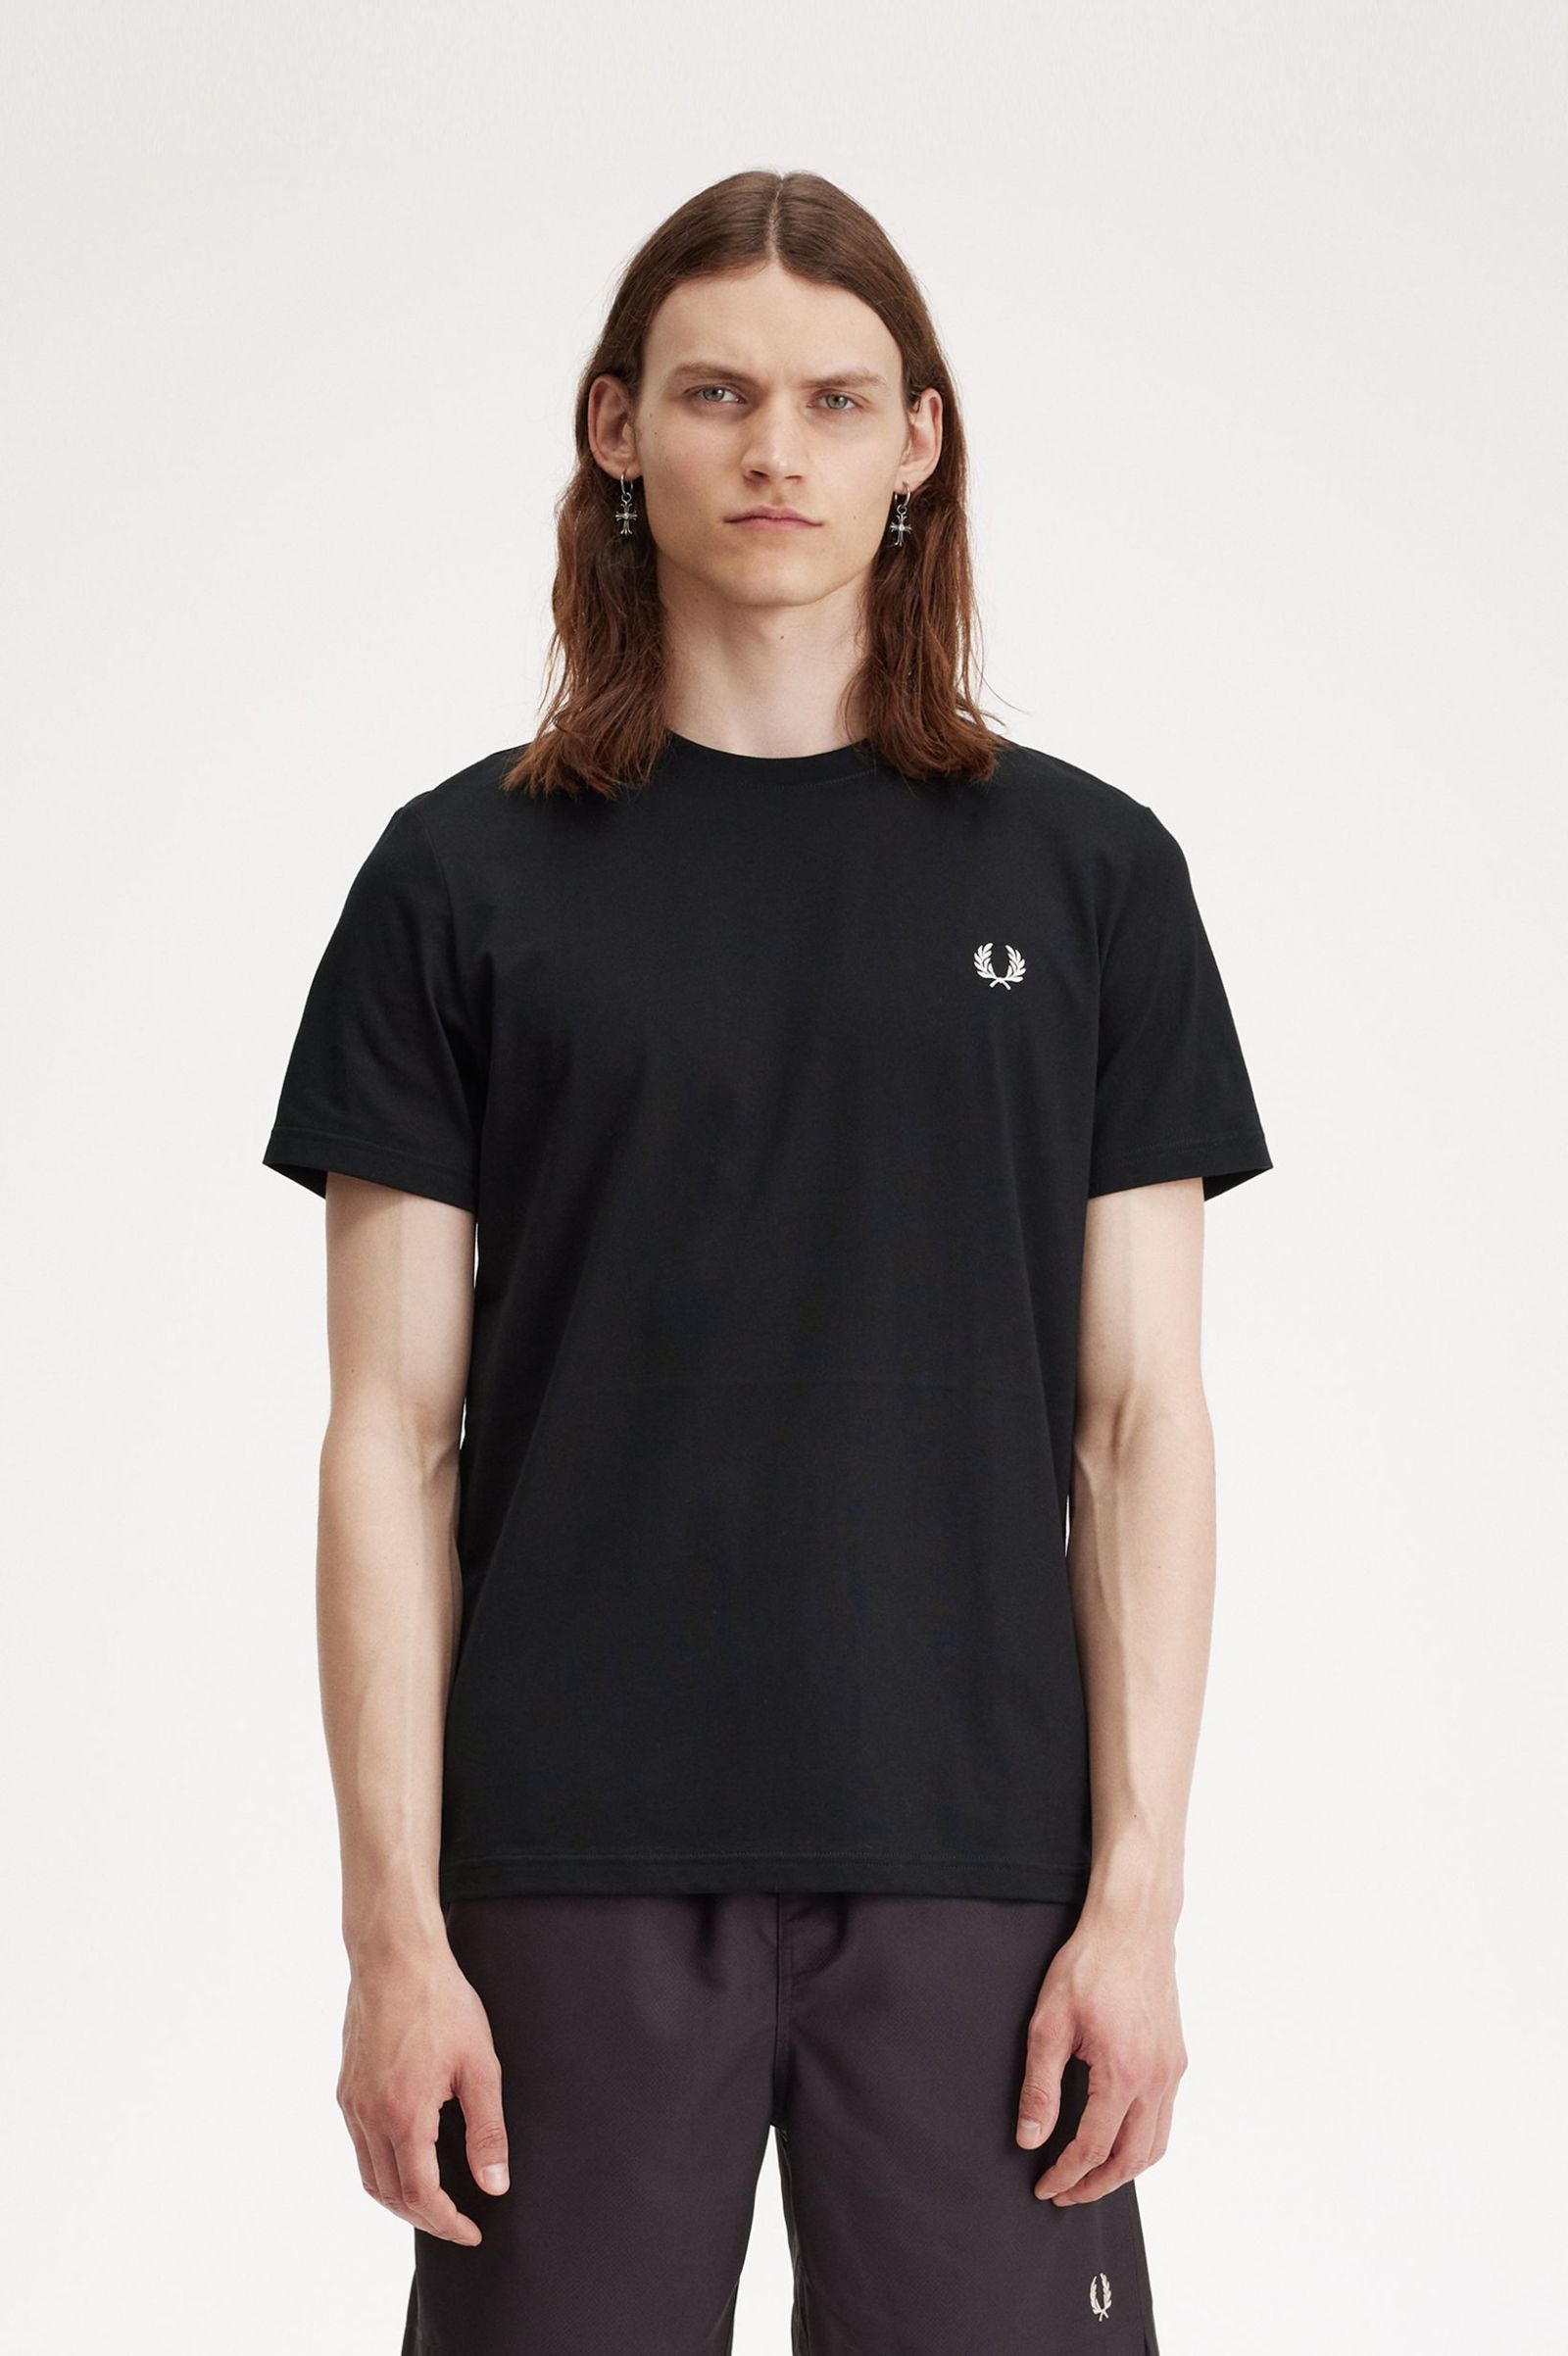 Laurel Wreath Graphic T-Shirt - Black | Men's T-Shirts | Designer T ...